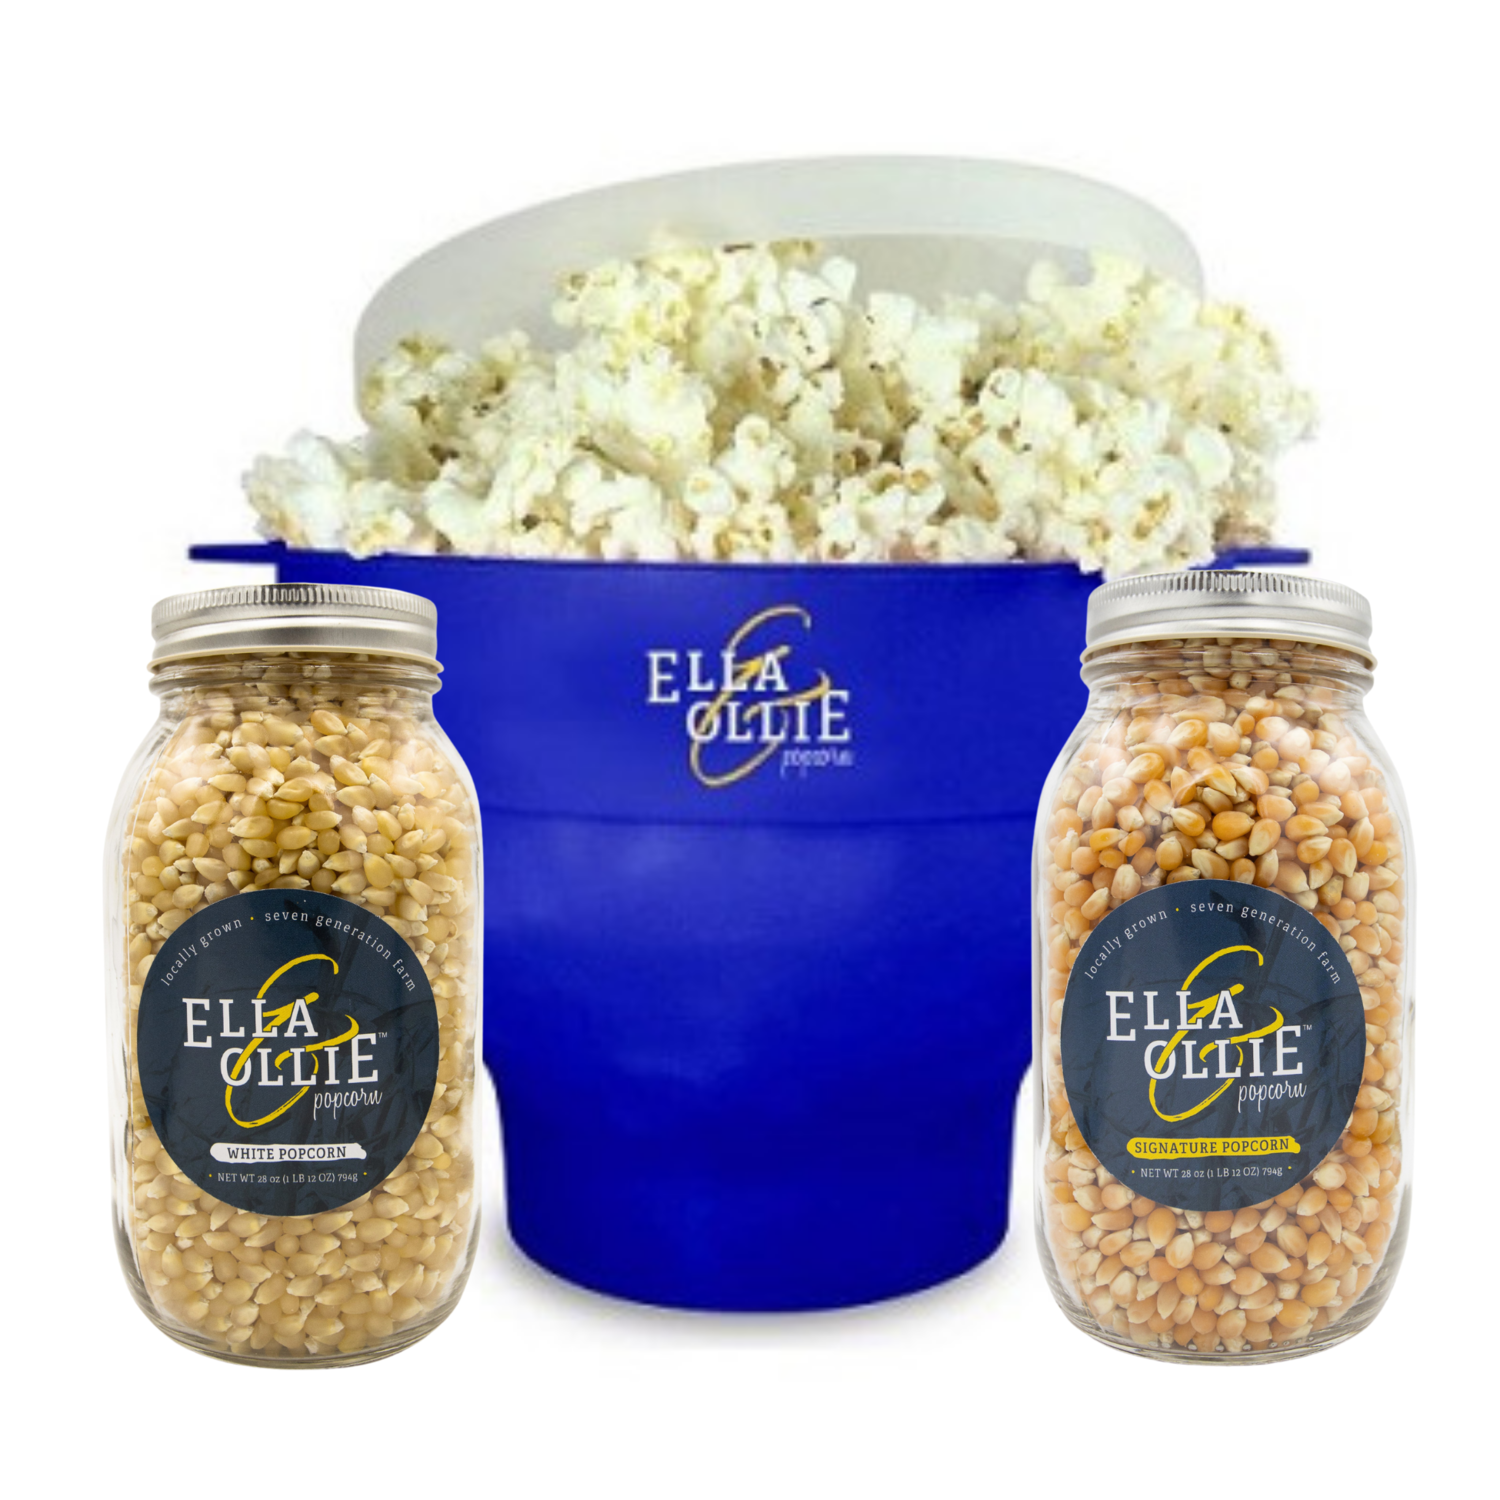 2 Mason Jars of Signature or White Popcorn (28 oz. each) and a Microwave  Popcorn Popper — ELLA & OLLIE POPCORN